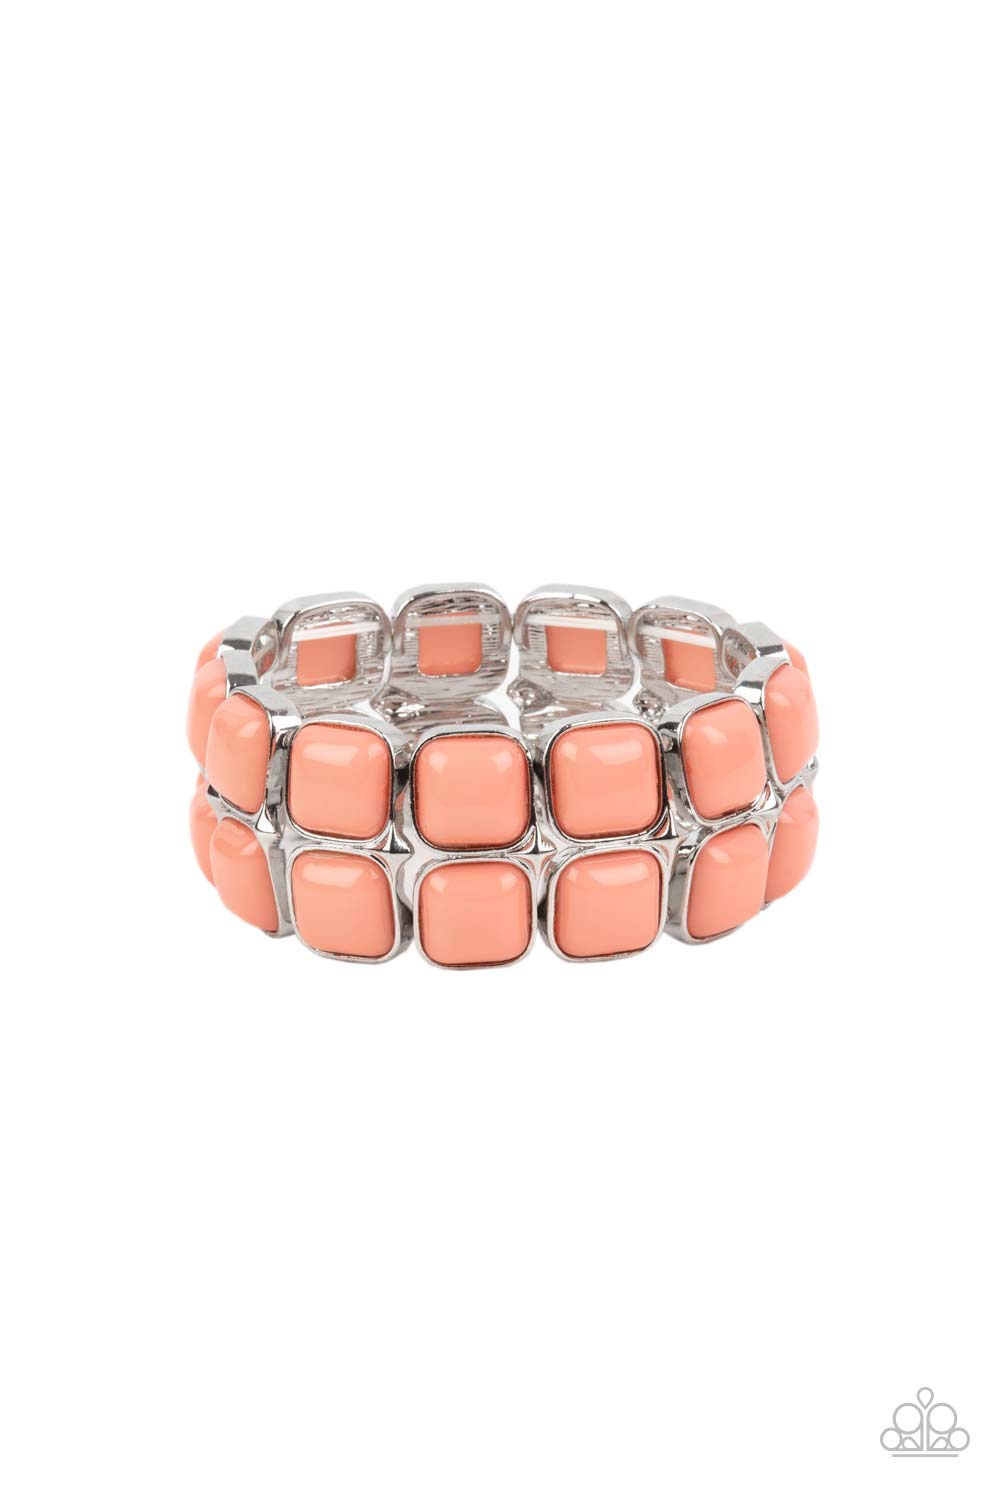 Double The DIVA-ttitde Orange (Coral) Bracelet freeshipping - JewLz4u Gemstone Gallery